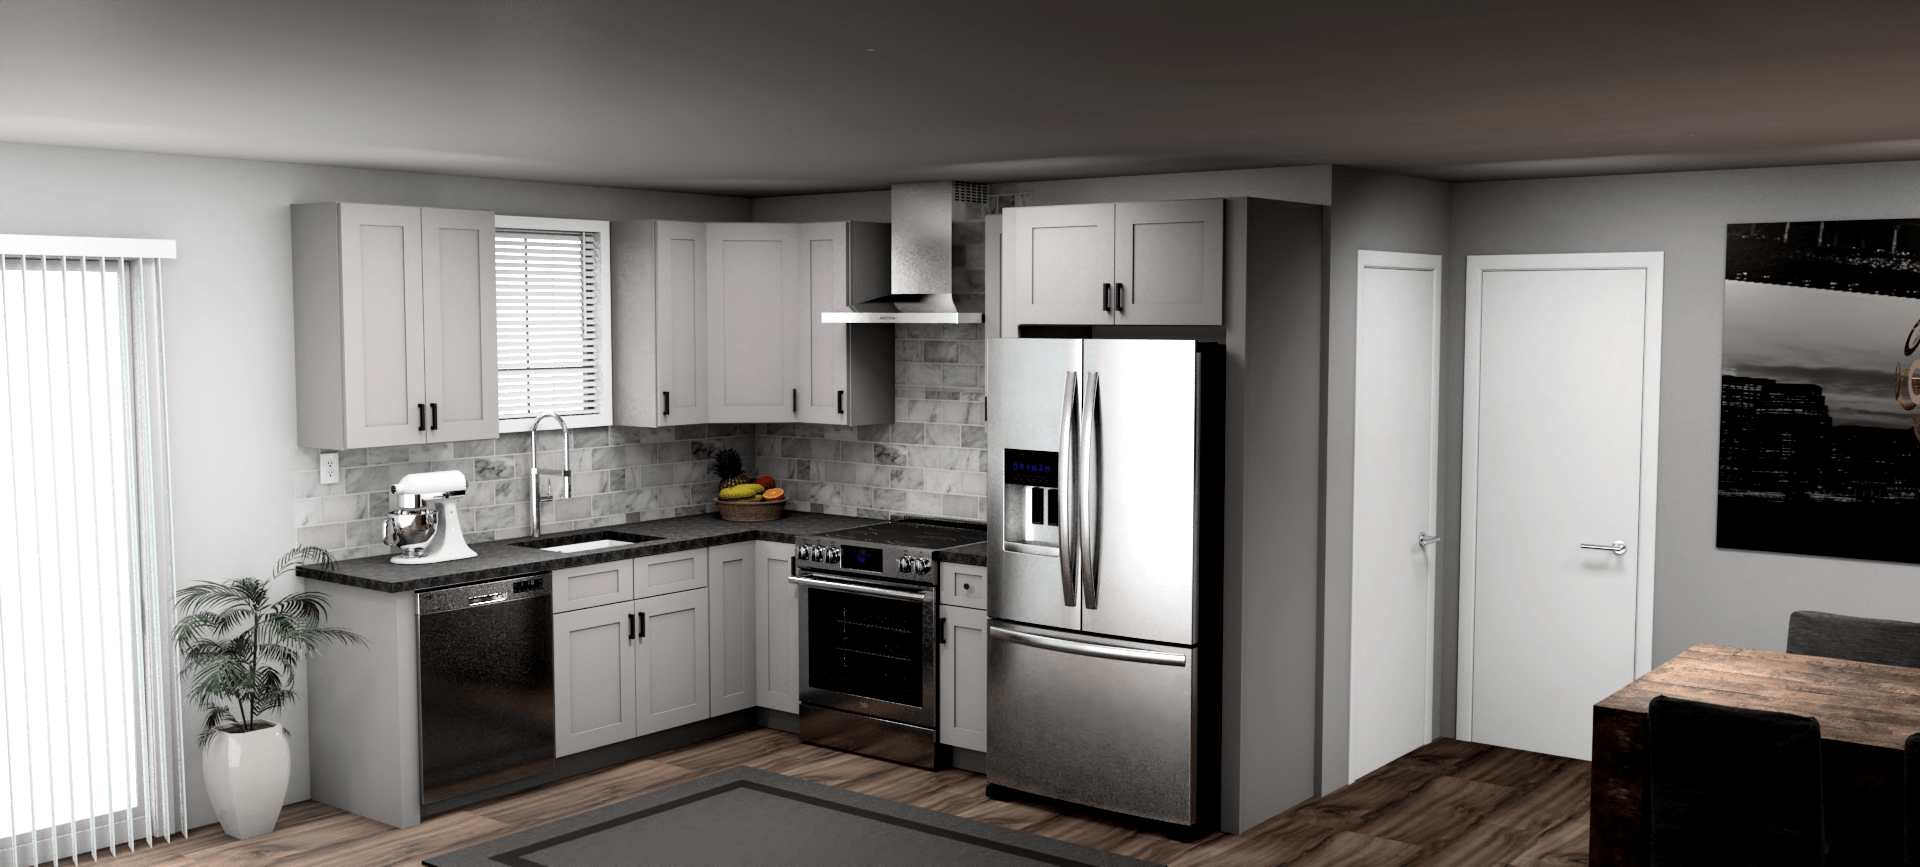 Fabuwood Allure Galaxy Nickel 8 x 10 L Shaped Kitchen Main Layout Photo